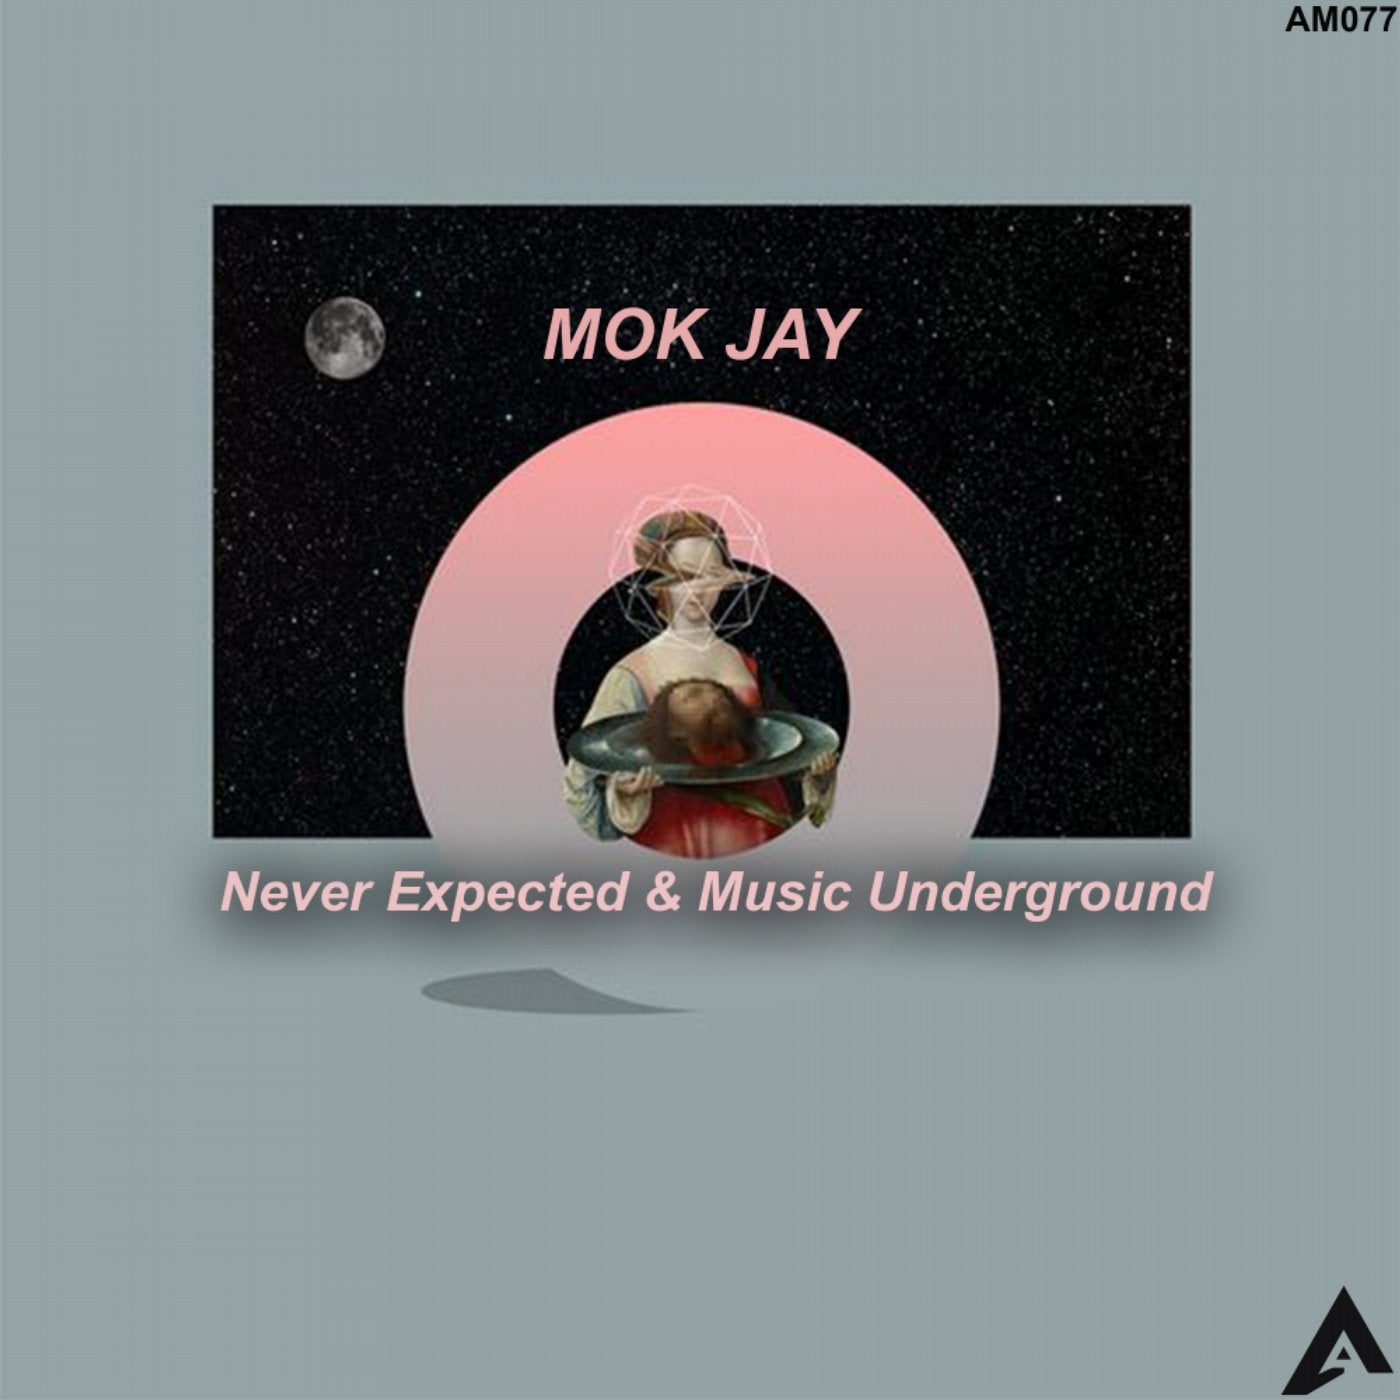 Never Expected & Music Underground